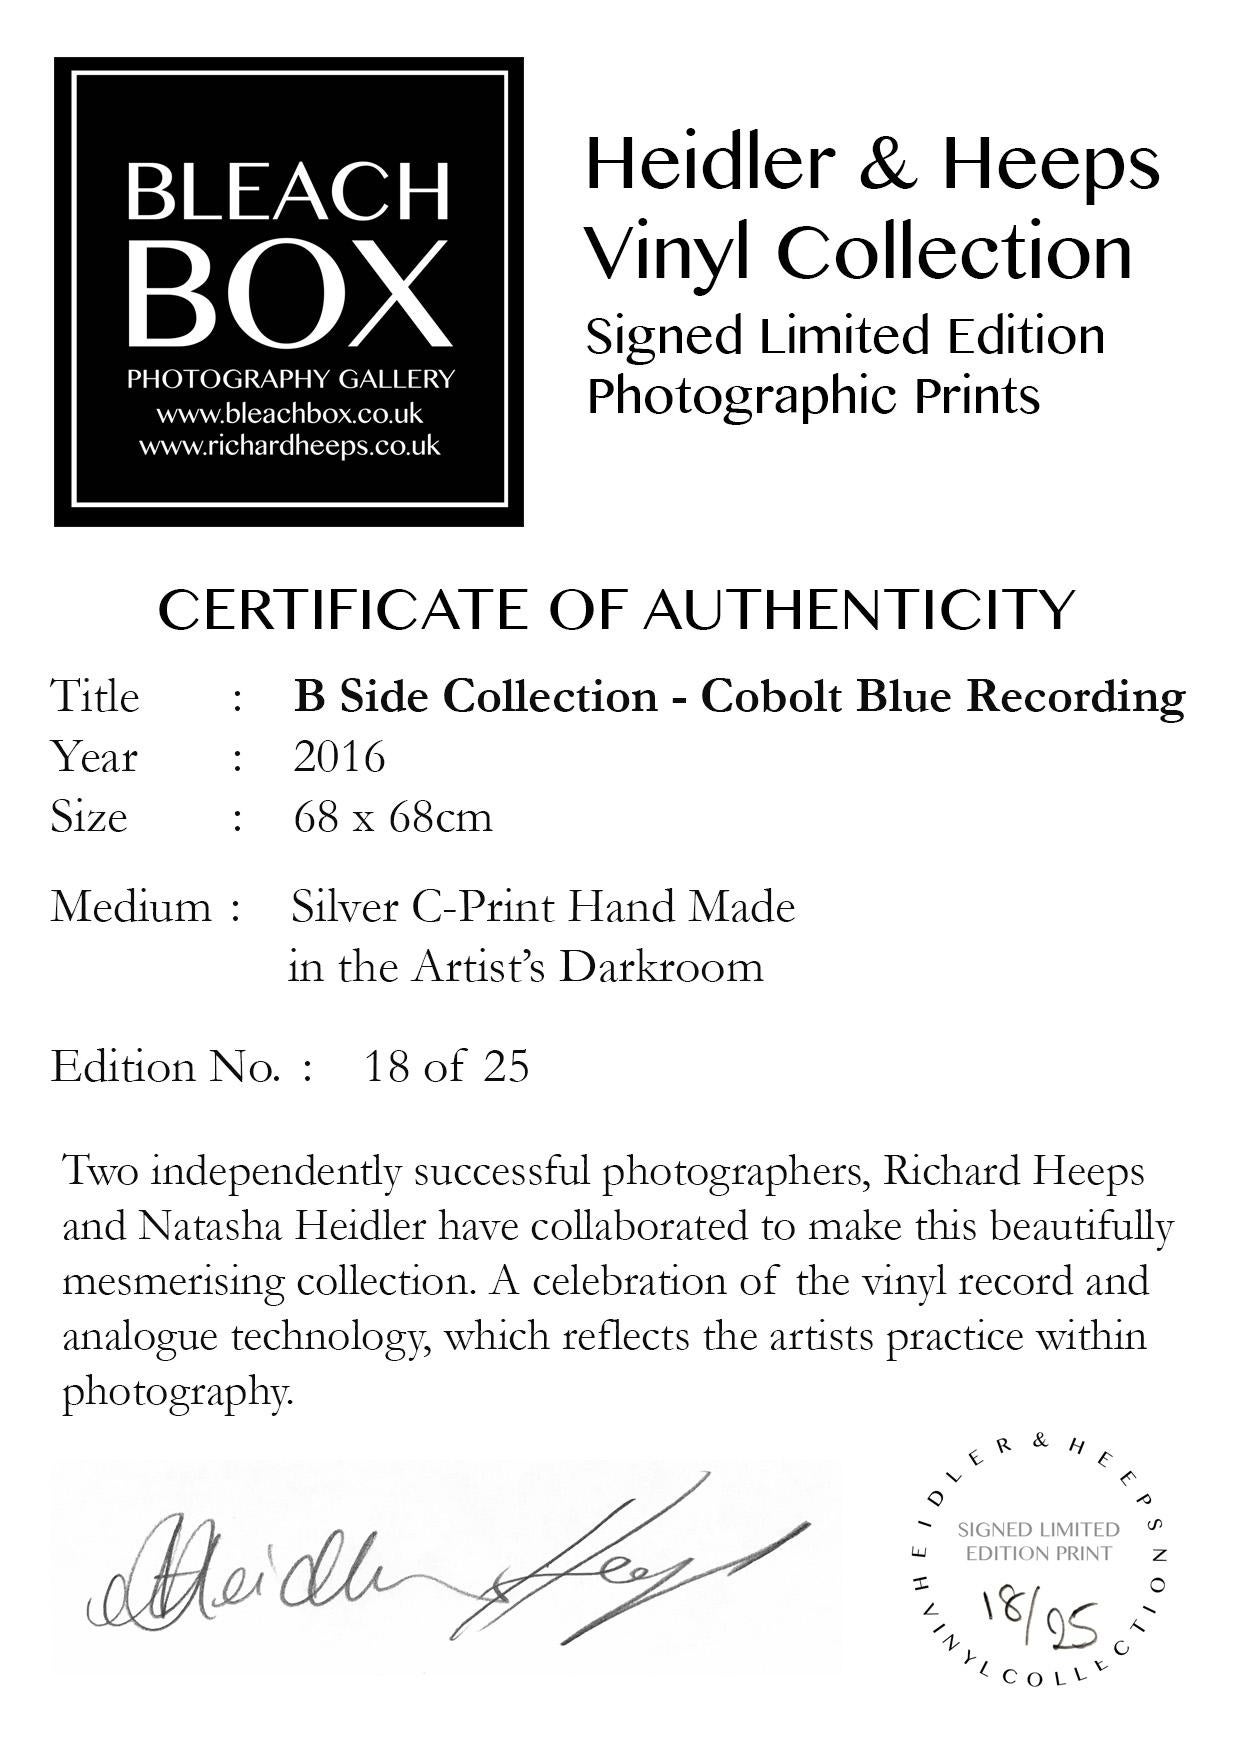 B Side Vinyl Collection, Cobolt Blue Recording - Pop Art Color Photogrpahy - Print by Heidler & Heeps